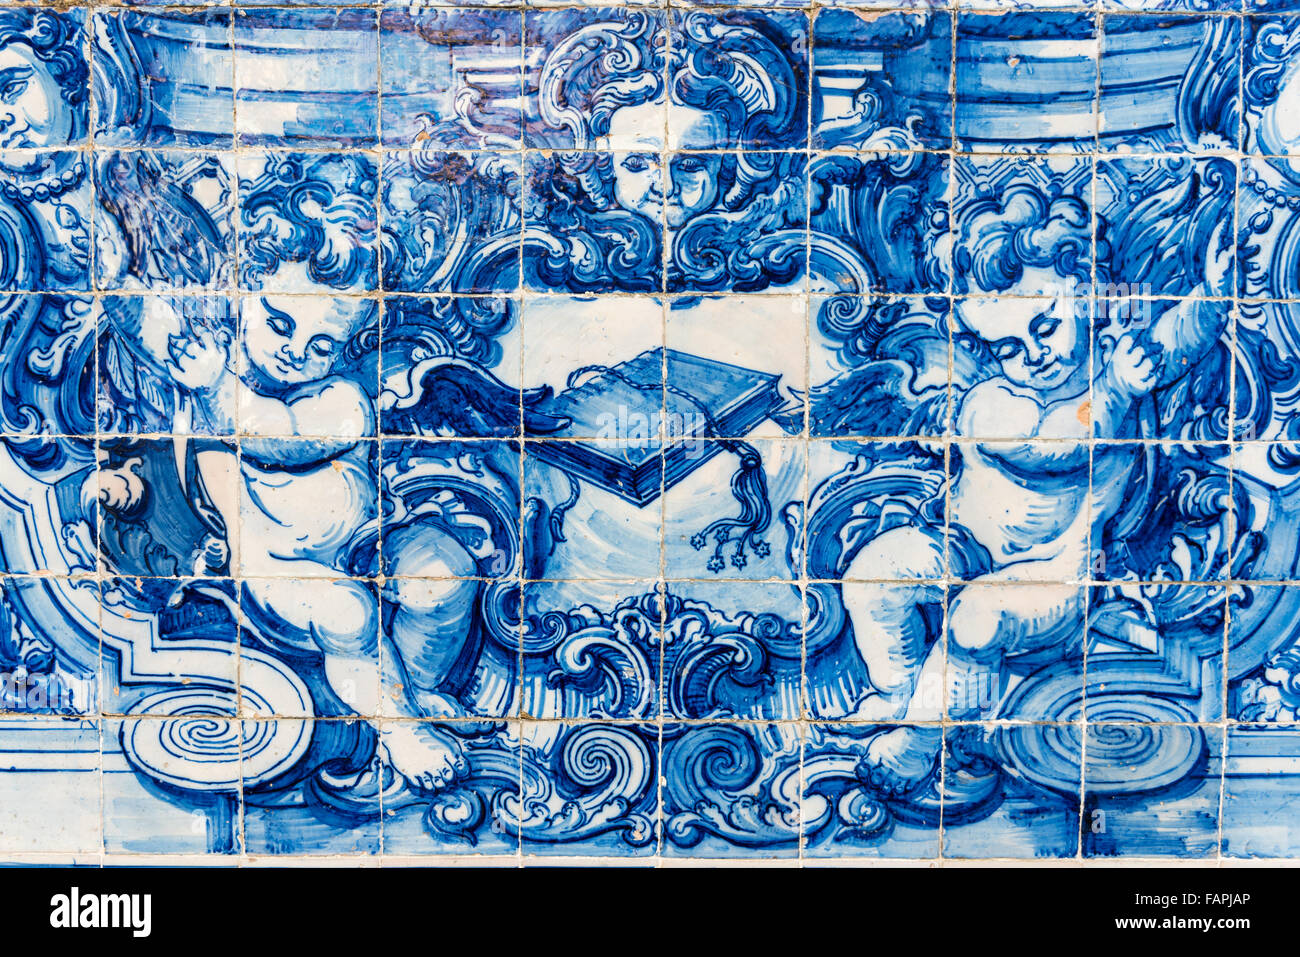 Decoration made with azulejol (traditional white and blue tiles) on the facade of the Capela das Almas, Porto Stock Photo